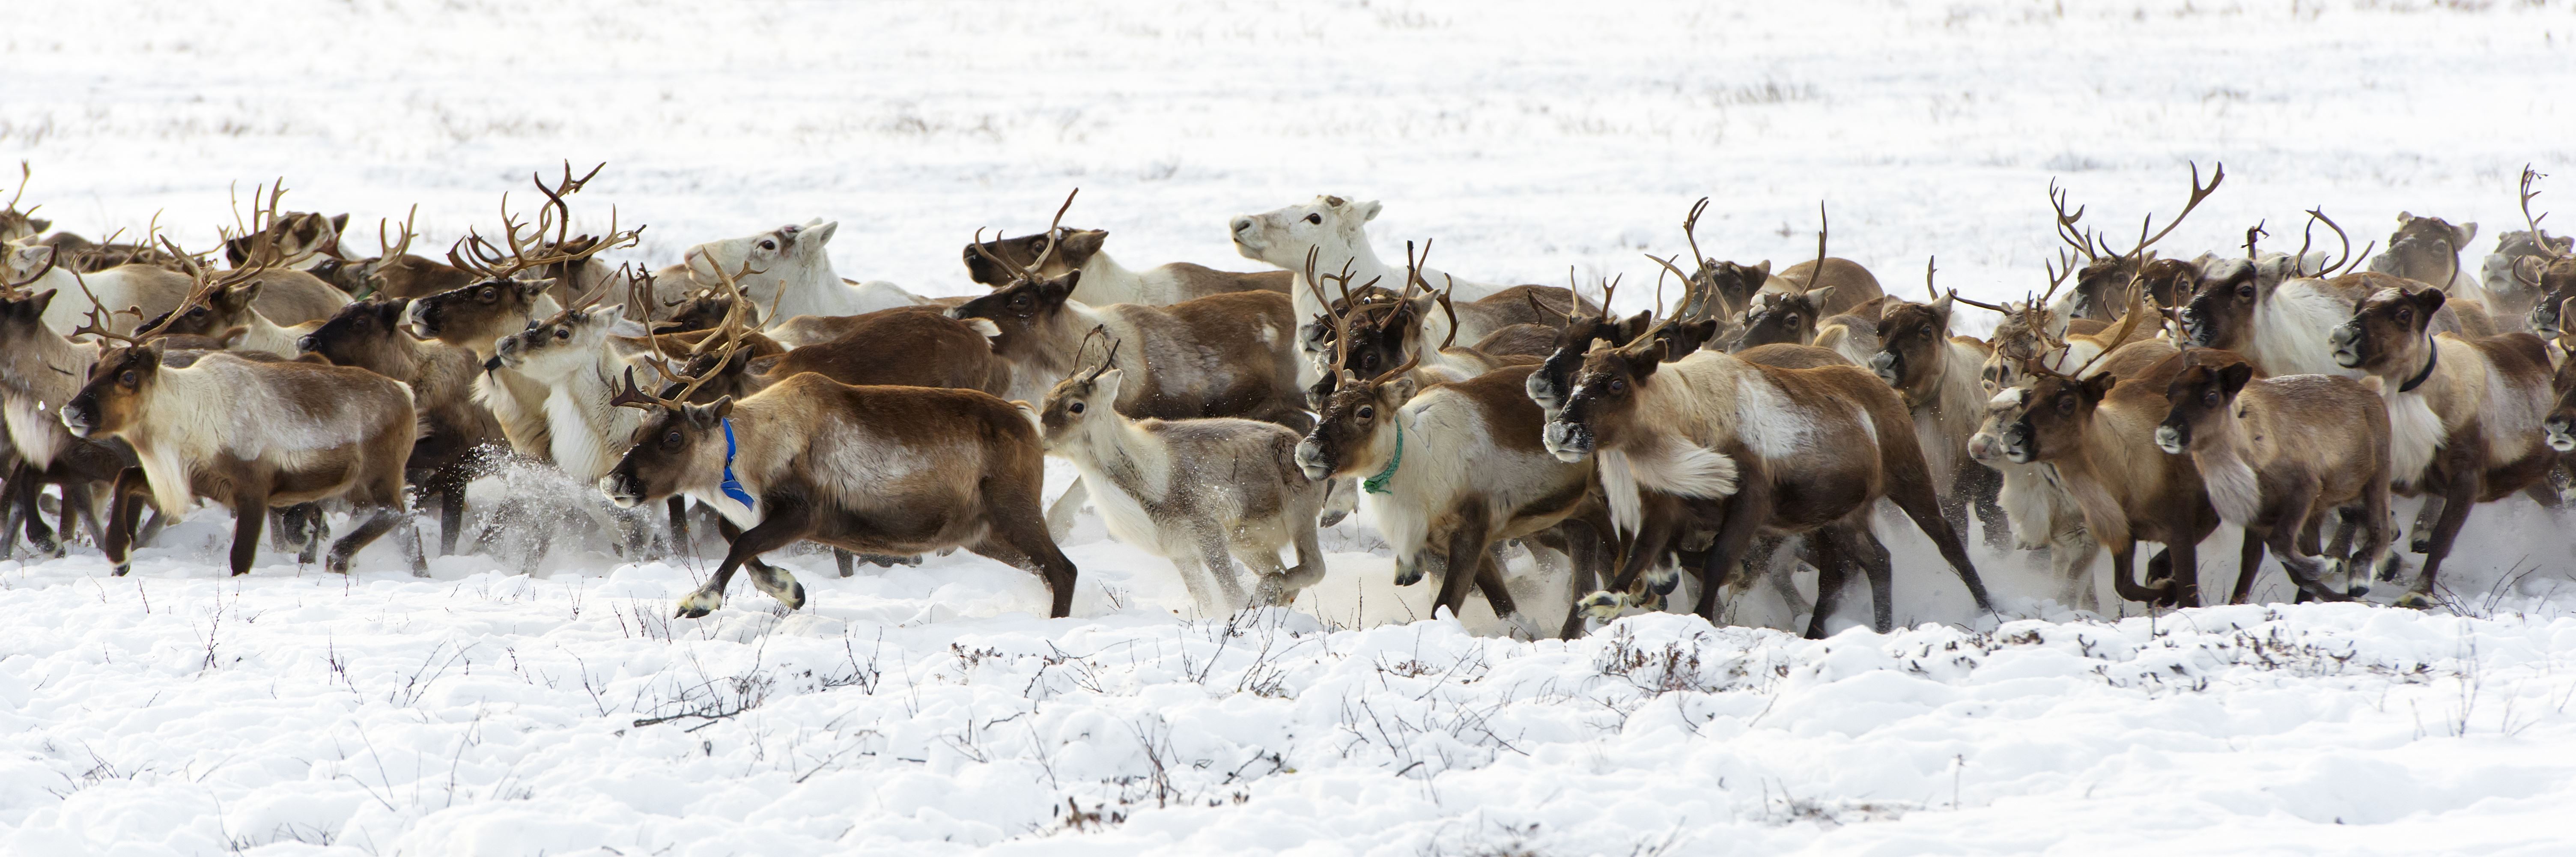 Reindeer migration_Adobe stock_longtaildog.jpeg